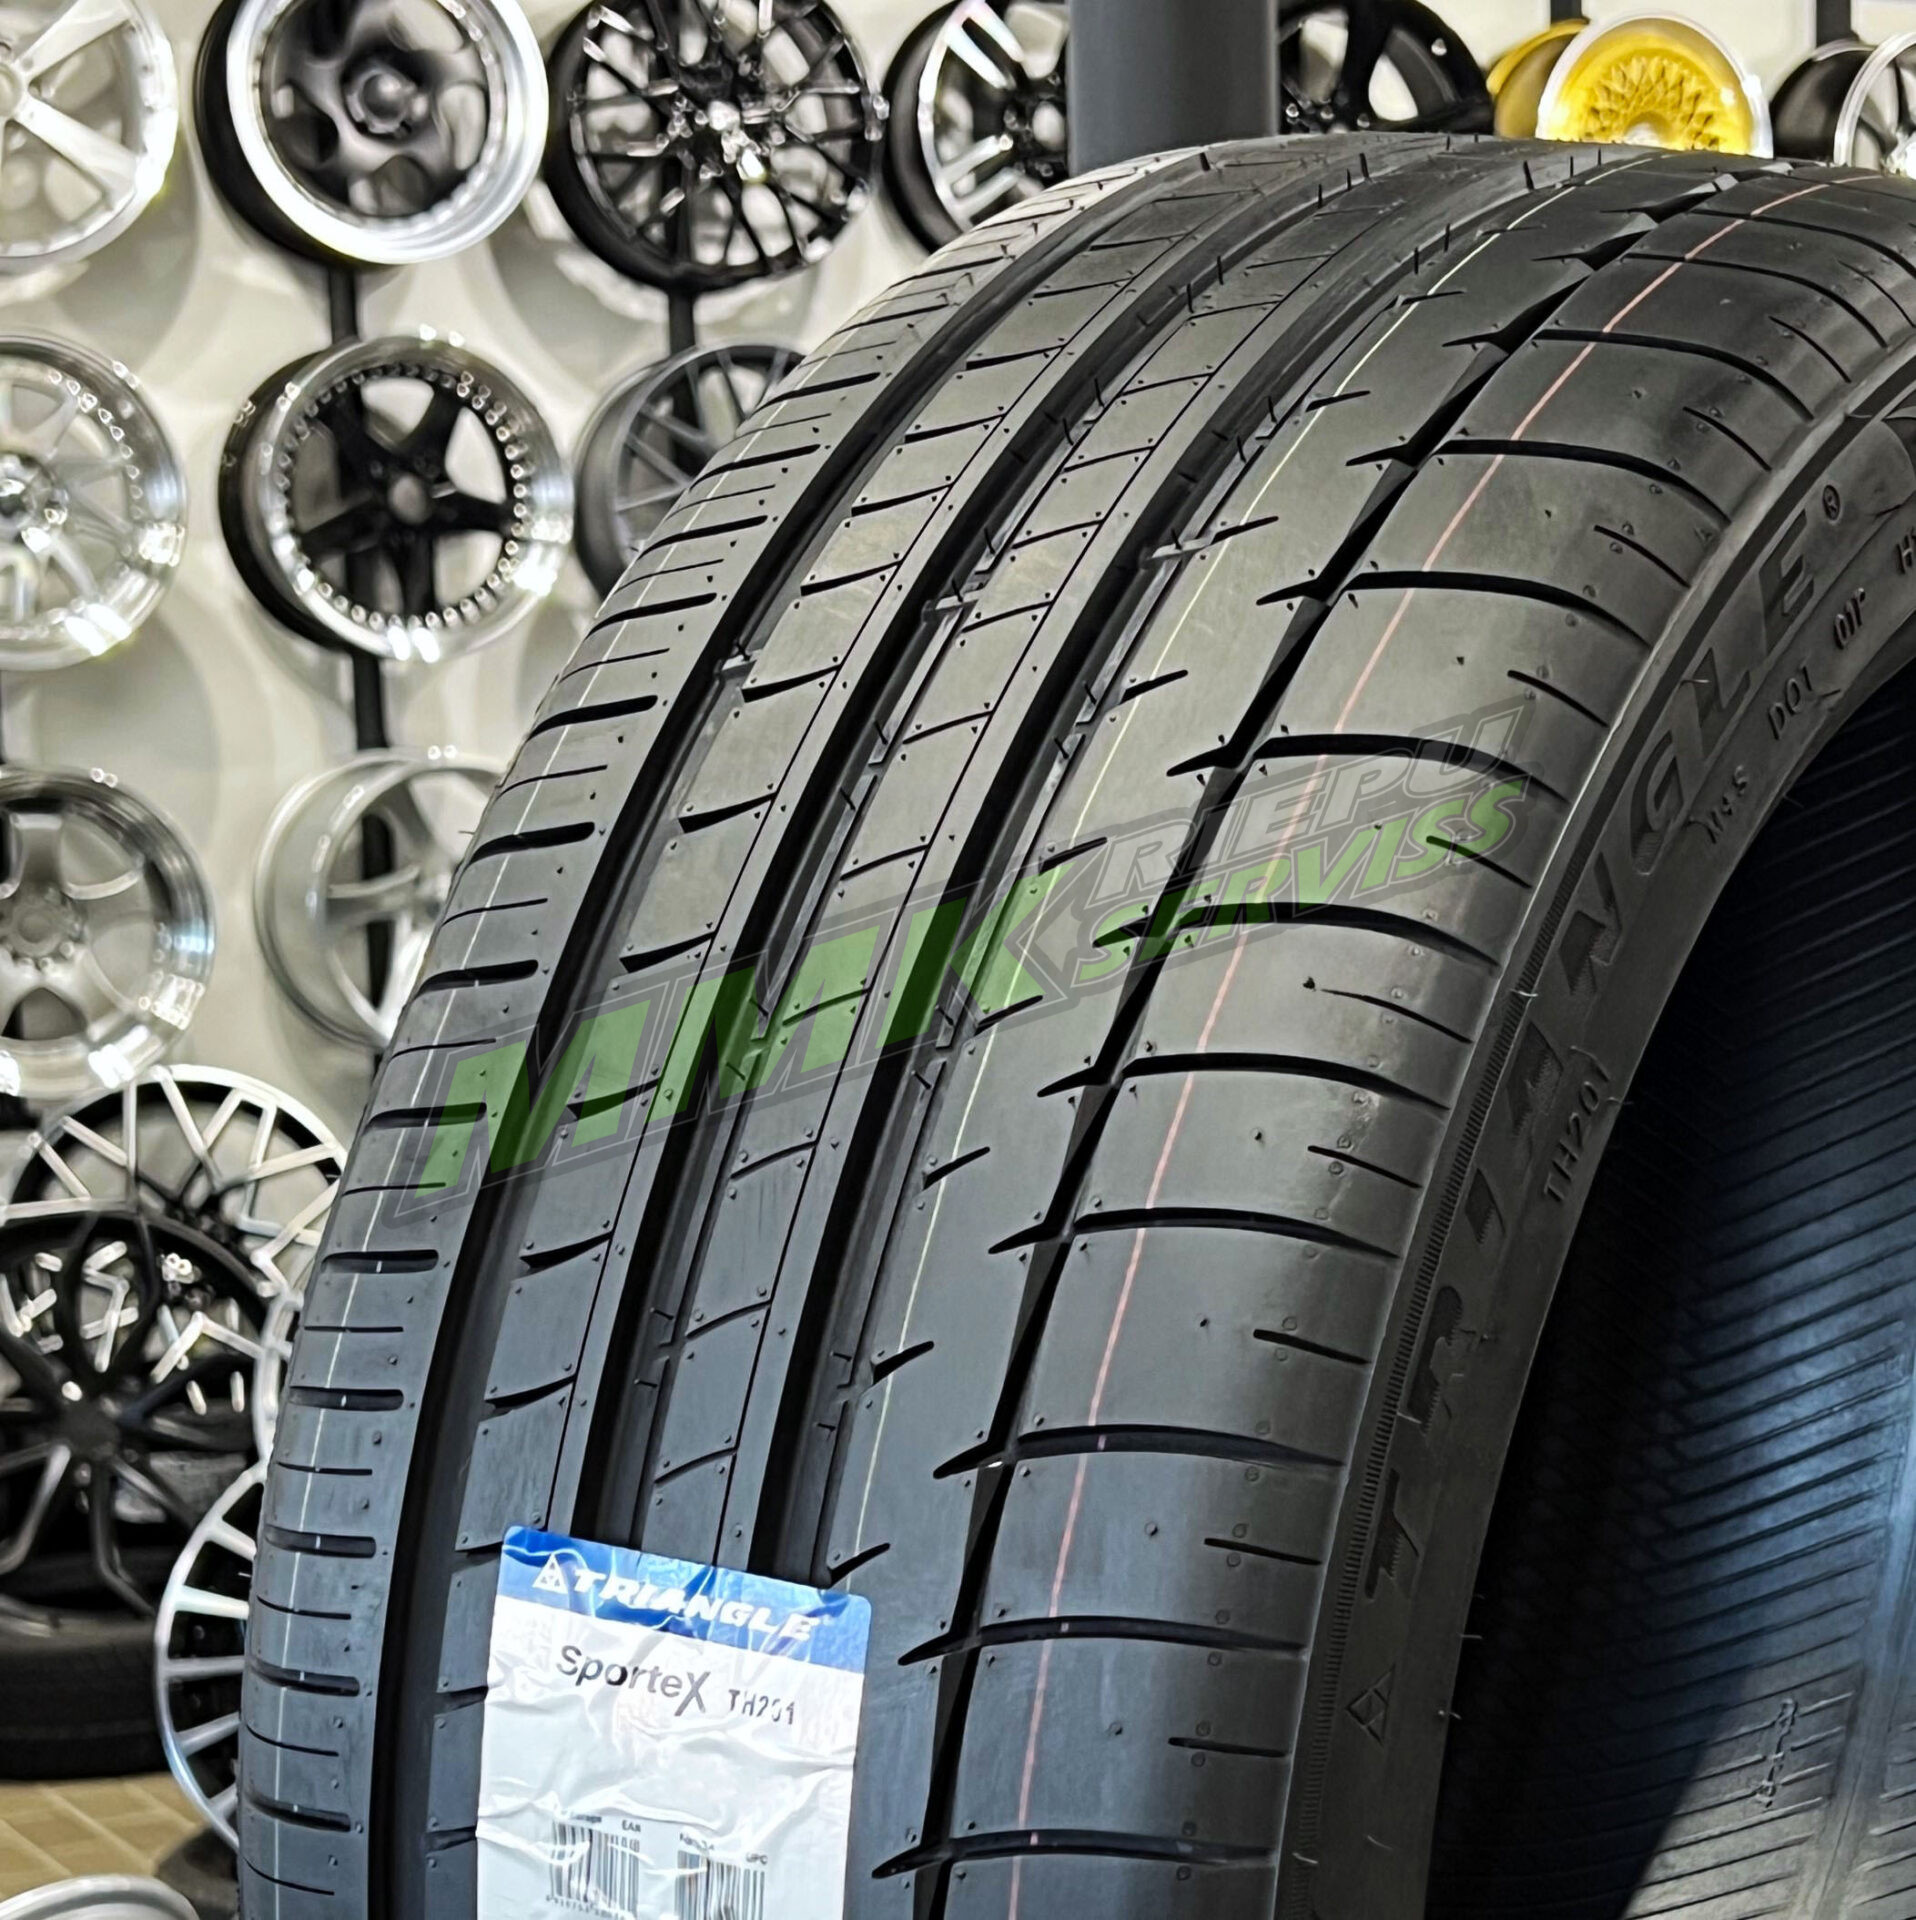 Tyre Austone 205/55 R16 91V M+S, SP-802